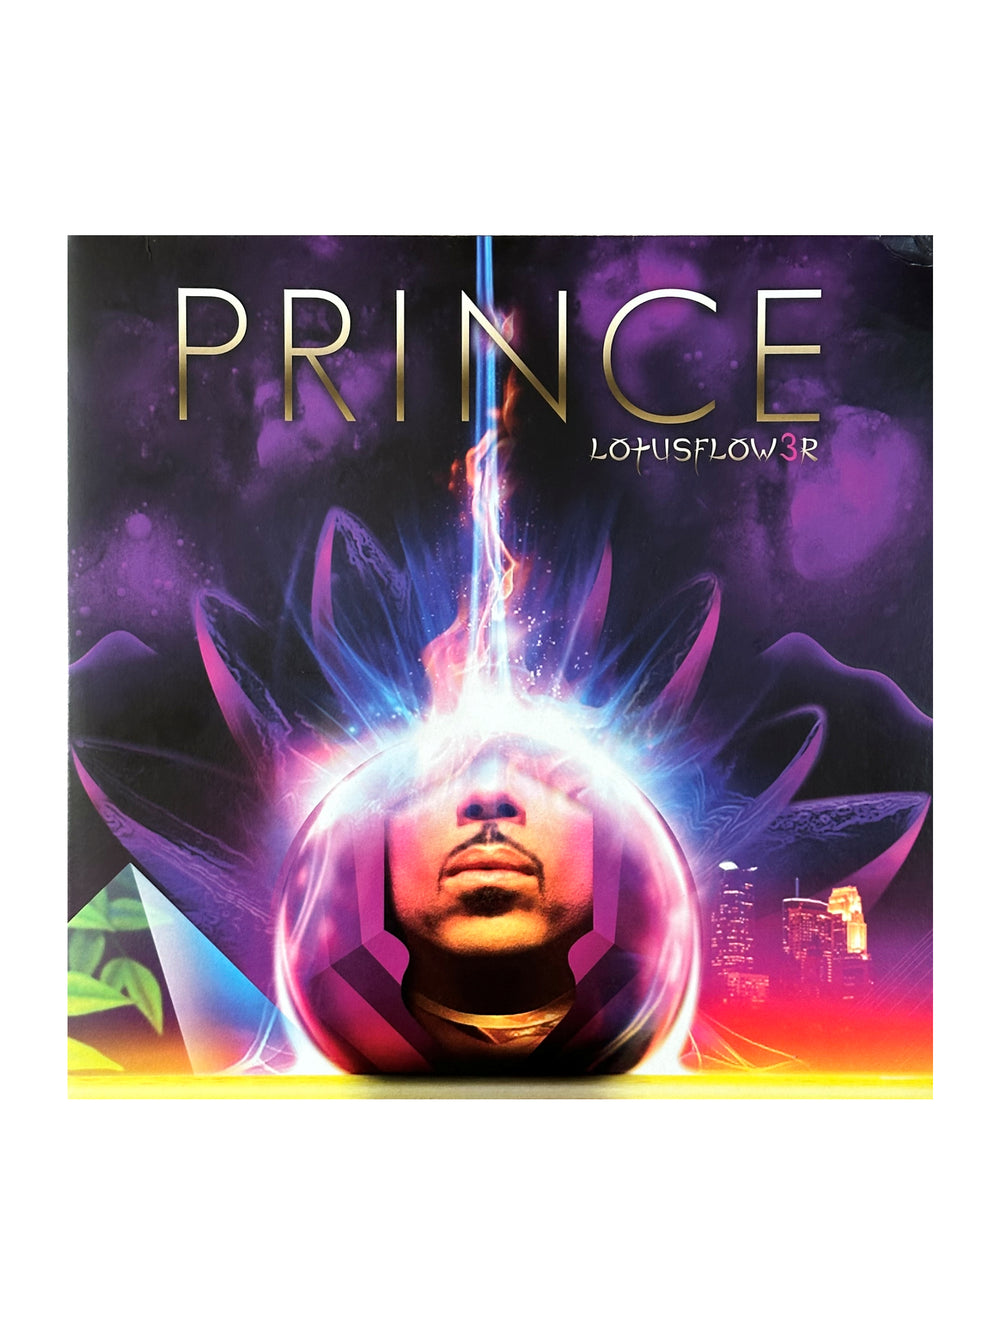 Prince – Lotusflow3r 2 x Vinyl LP Album 2 x CD Album Reissue Limited Edition France Preloved: 2015